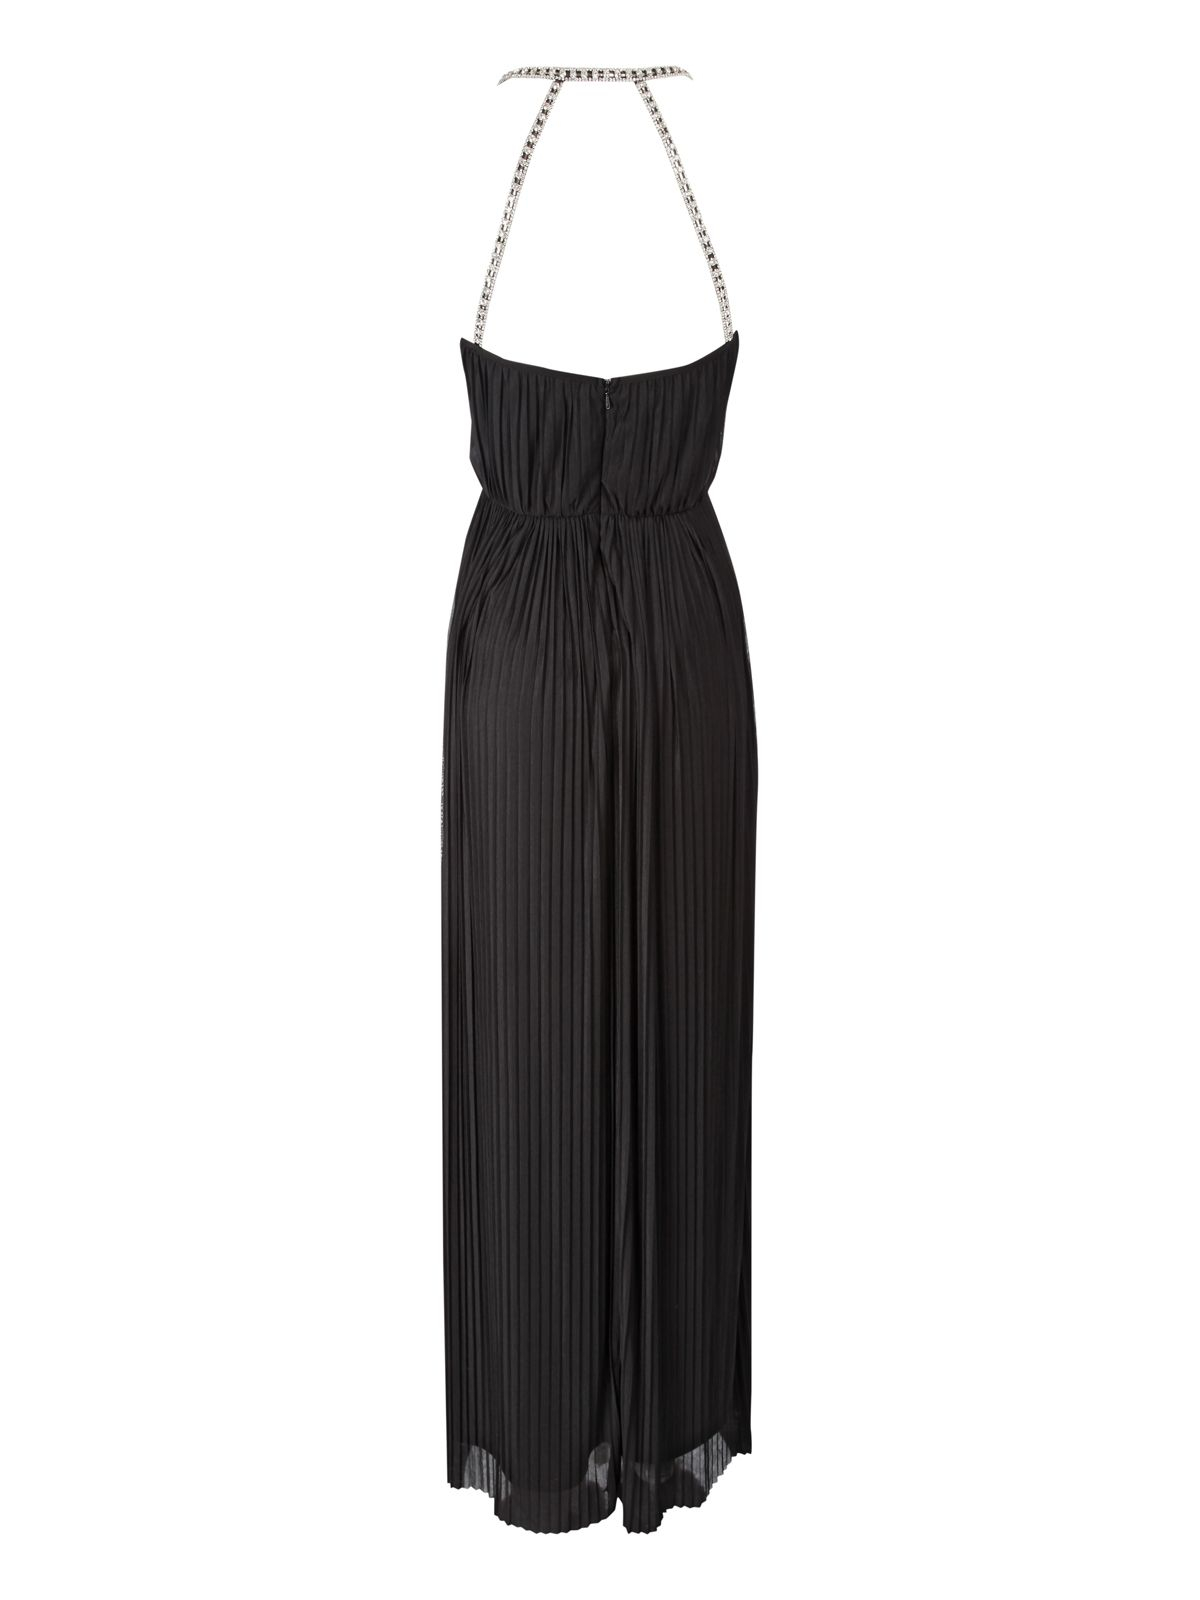 Jane norman Diamante Strap Maxi Dress in Black | Lyst